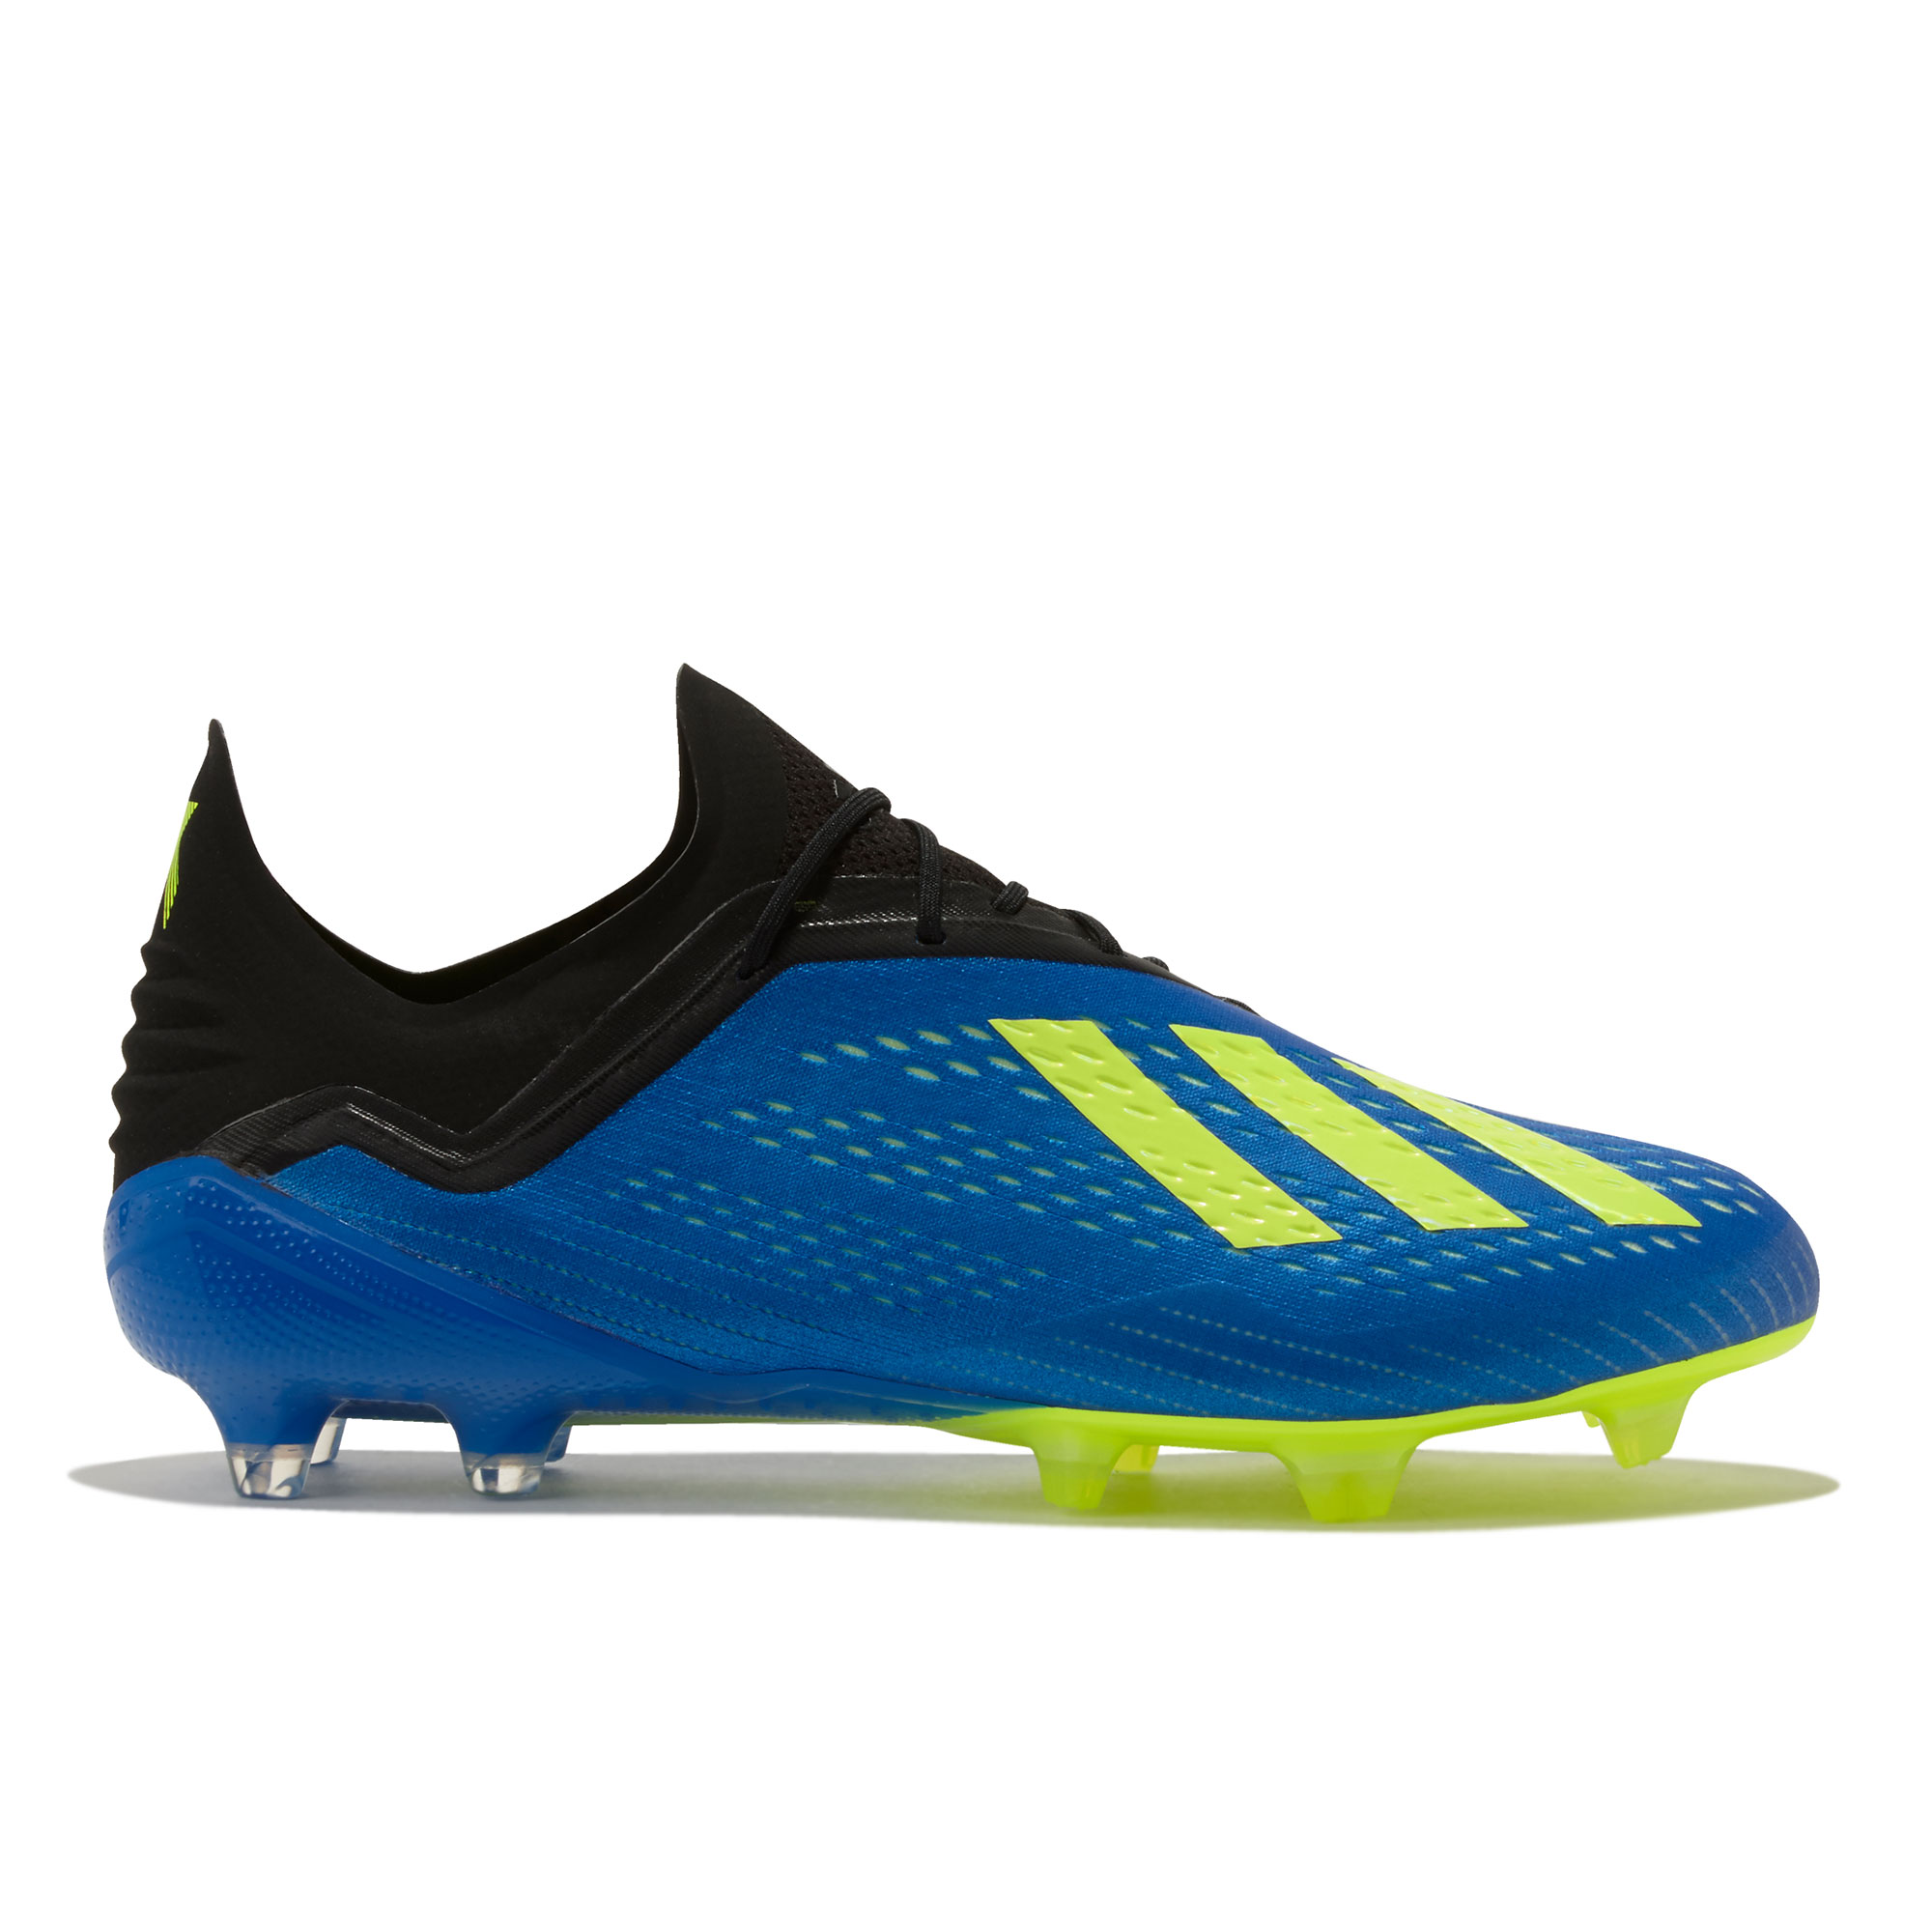 Adidas adidas X 18.1 Firm Ground Football Boots - Blue